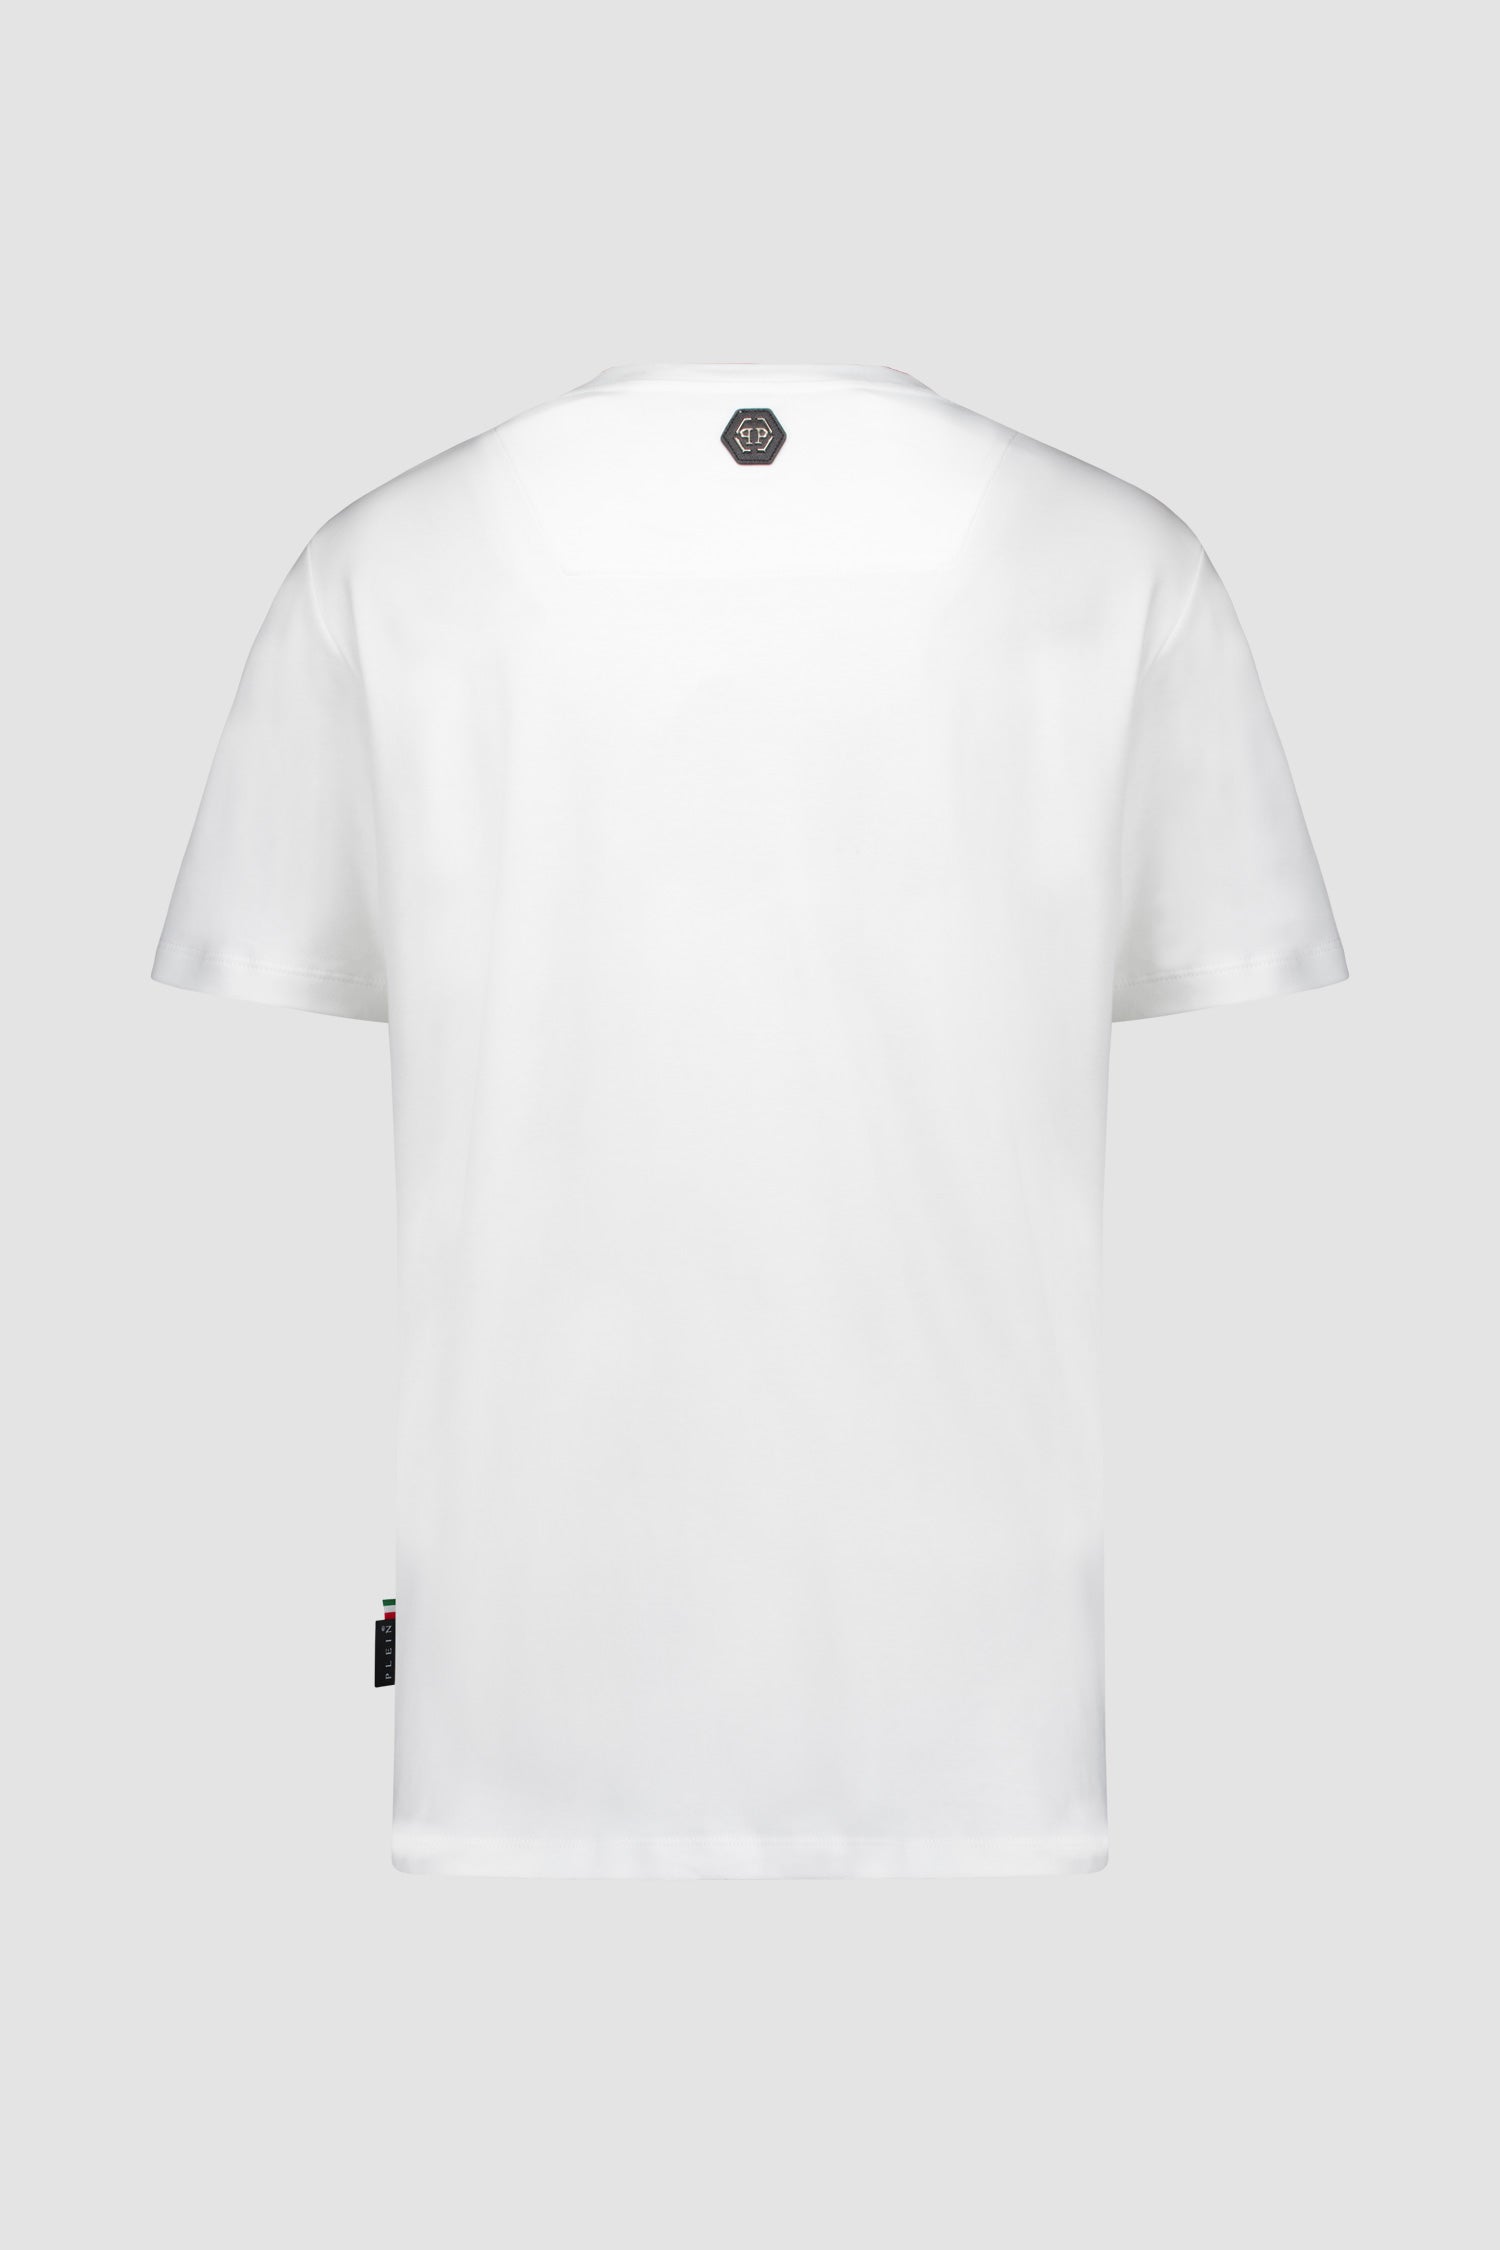 Philipp Plein White Round Neck SS T-Shirt